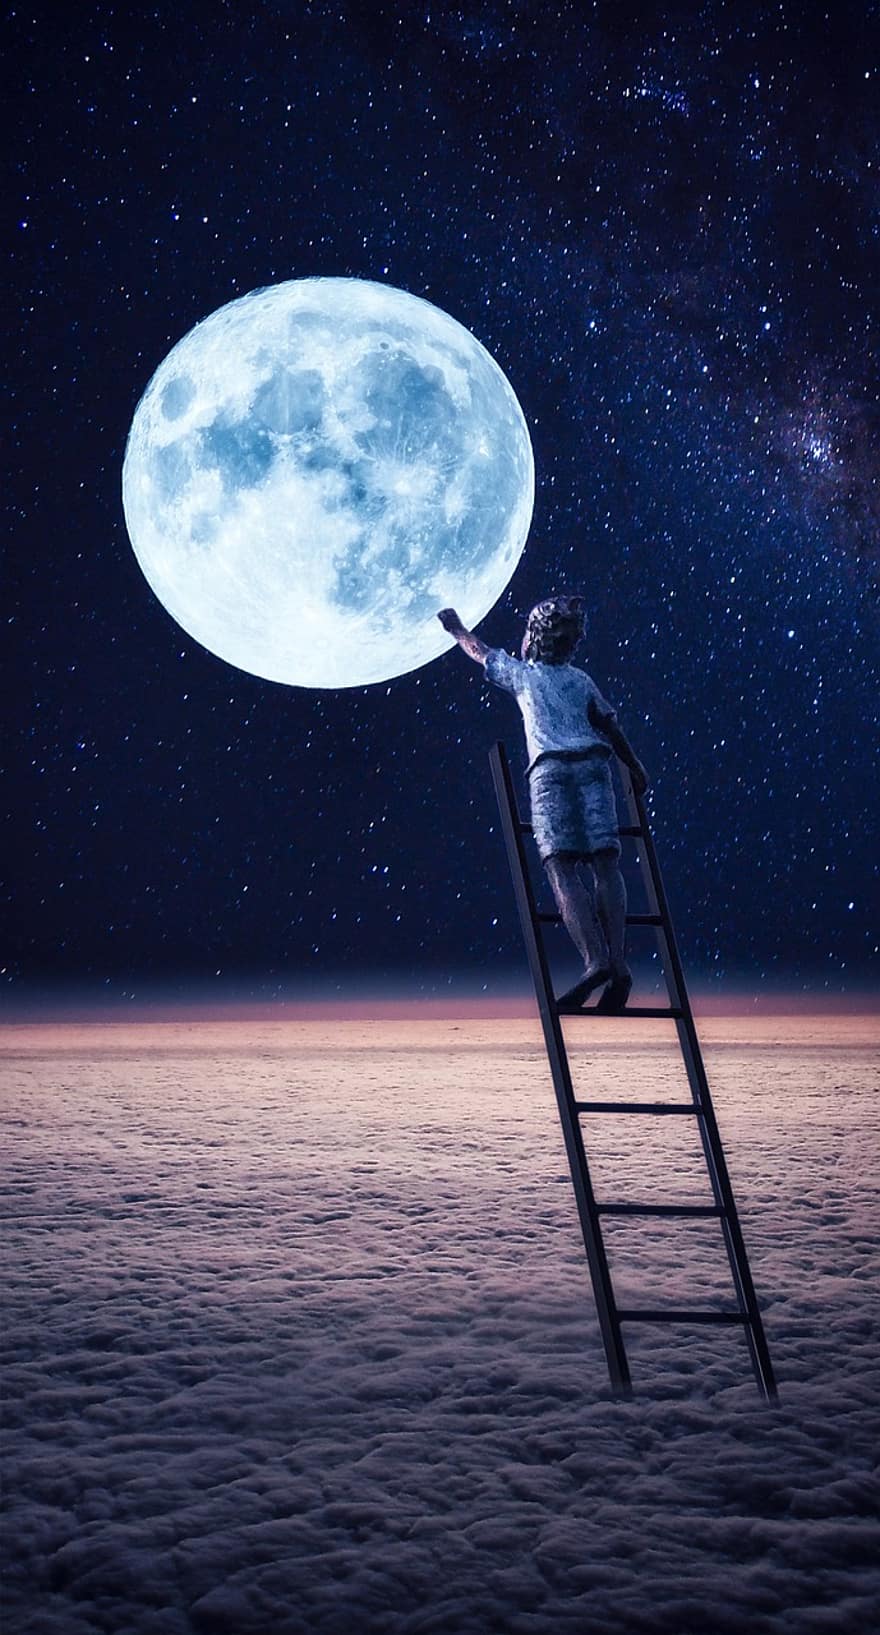 maan, nacht, ladder, kind, wolken, droom, mannen, ruimte, melkweg, astronomie, donker